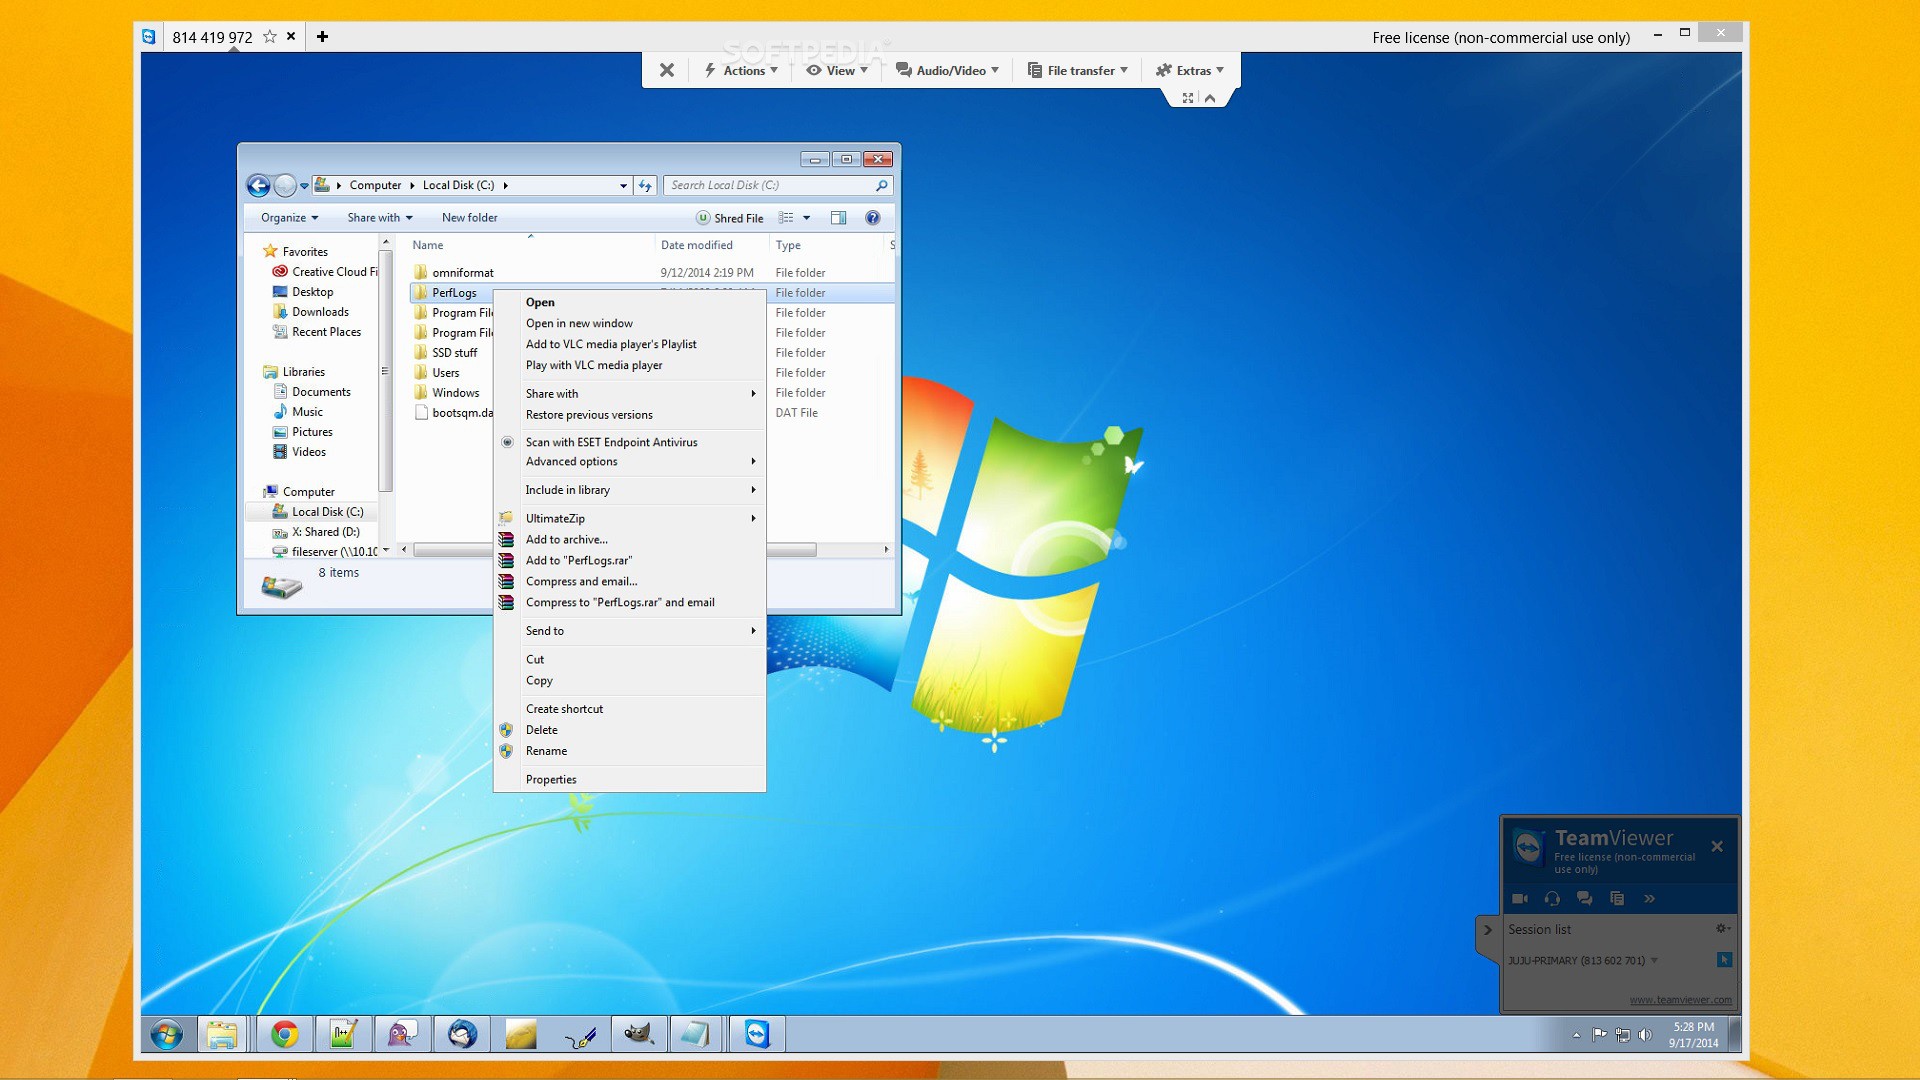 teamviewer 9 free download for windows xp 64 bit